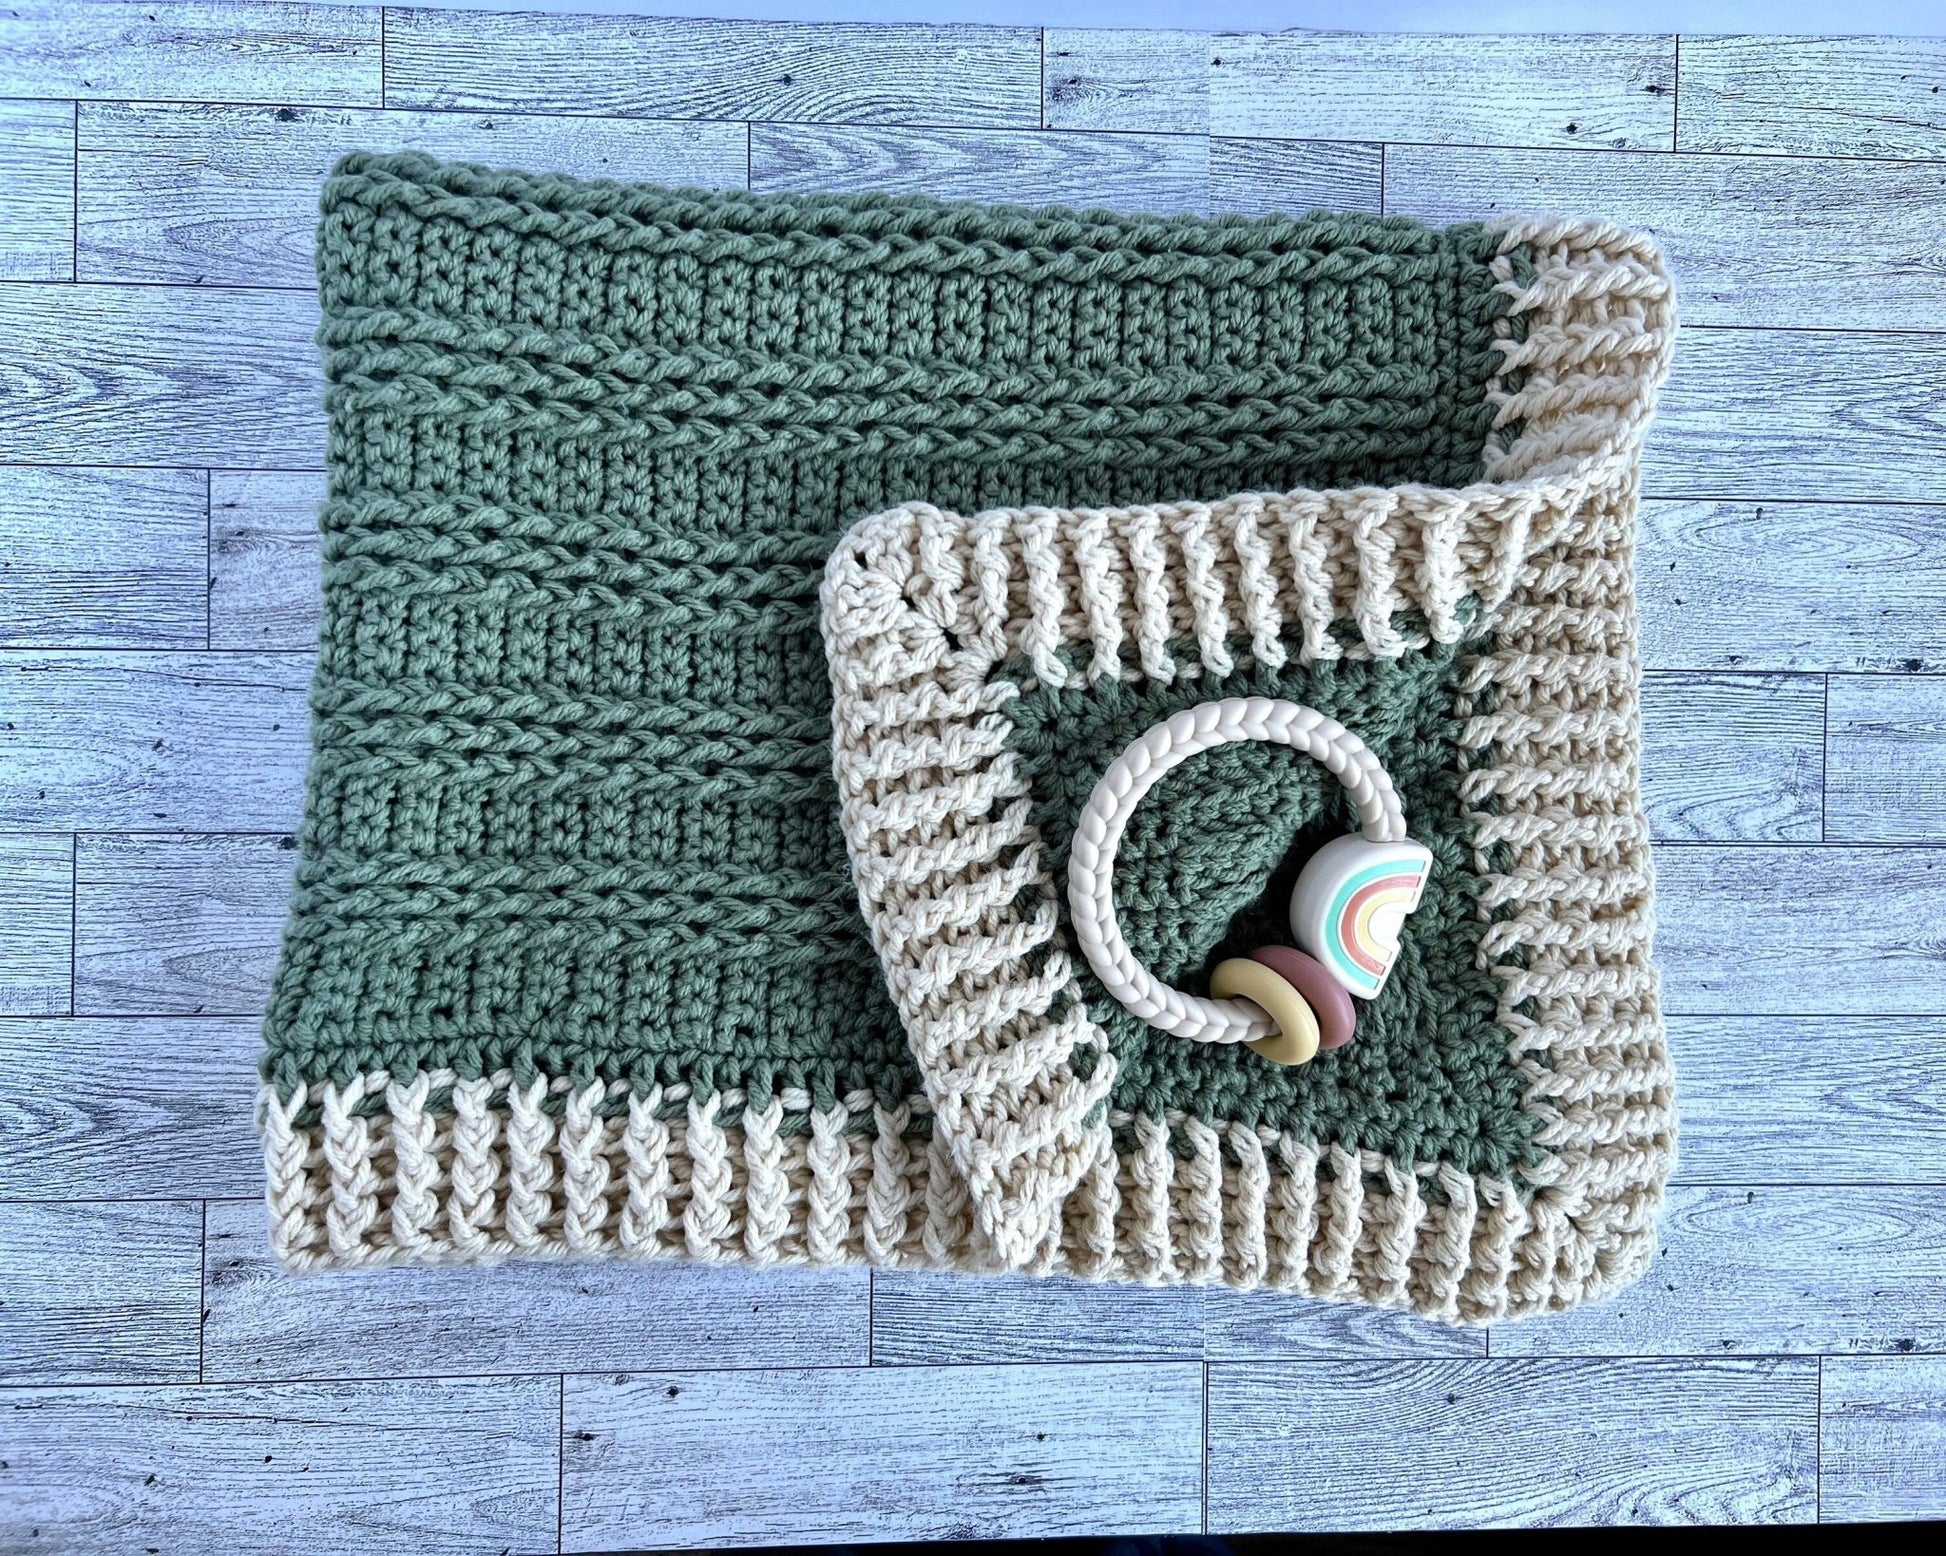 Green and beige baby blanket,modern heirloom blanket, blanket for baby boy- baby shower gift 31”x26”cradle blanket, boho room decor, modern - Lilly Grace Sparkle Boutique